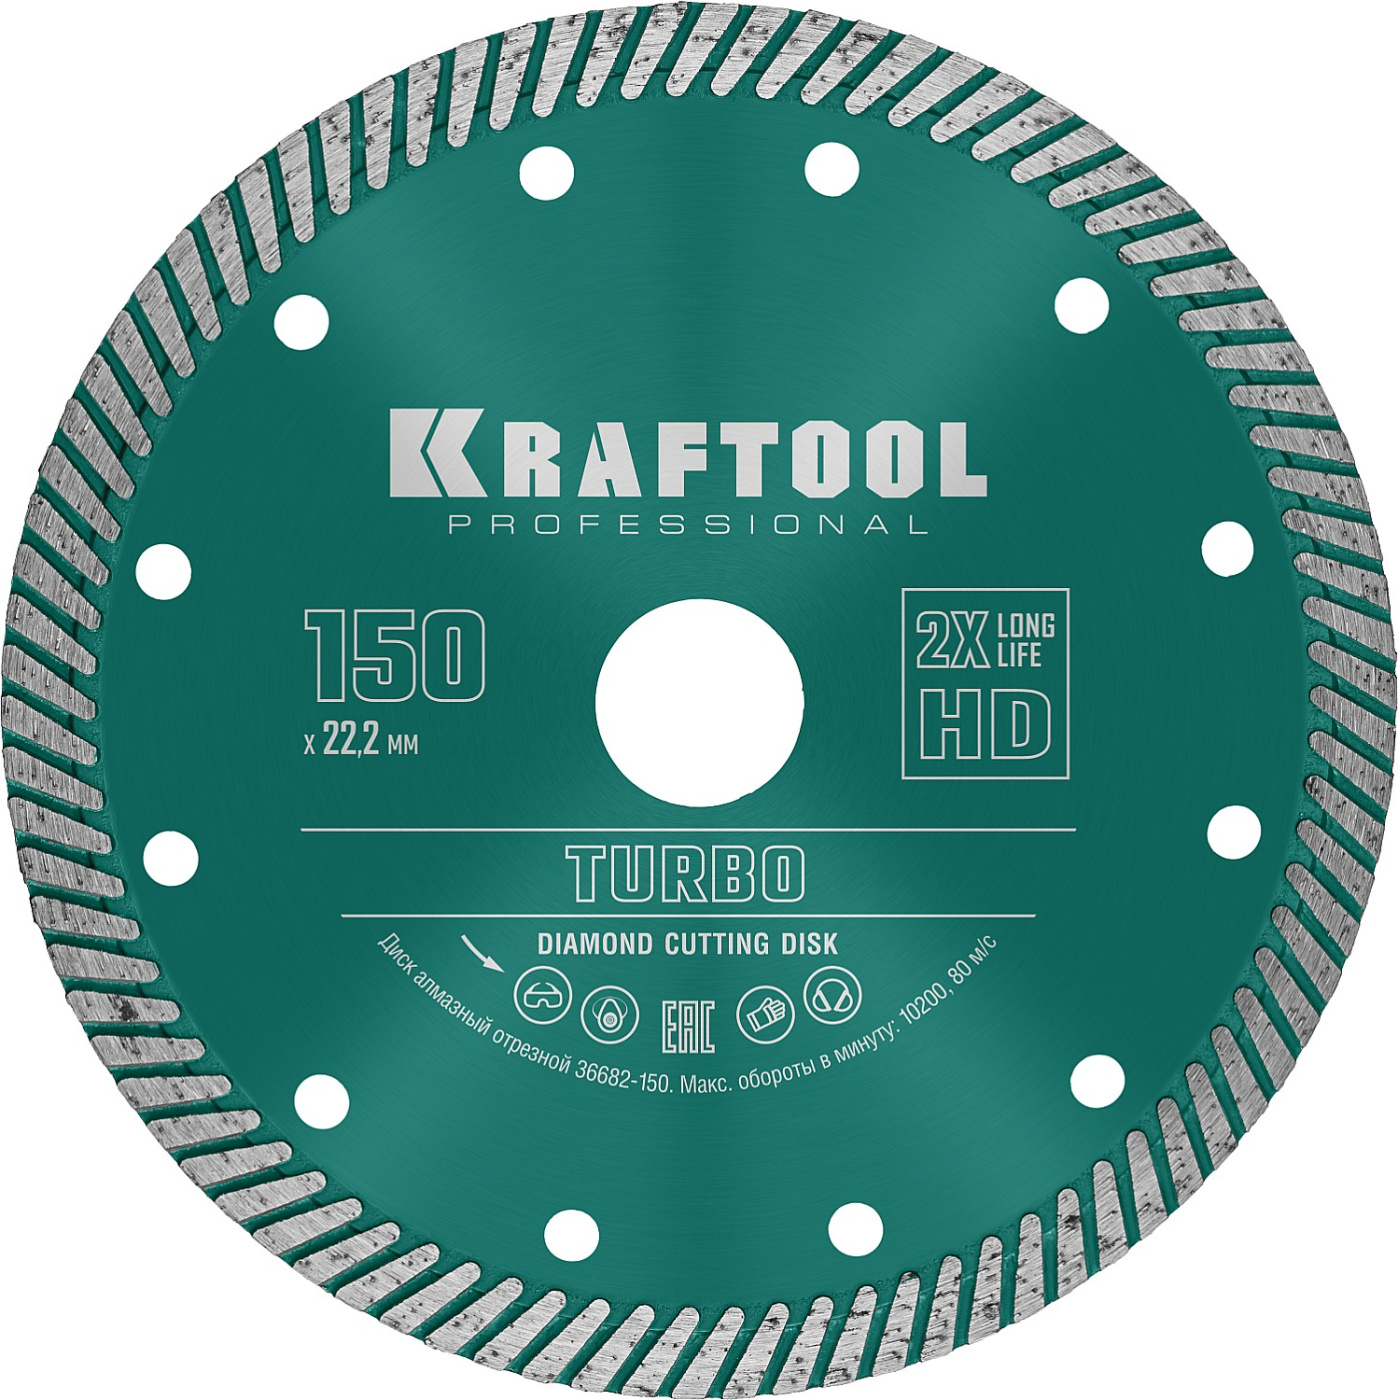 KRAFTOOL Turbo, 150 мм, (22.2 мм, 10 х 2.4 мм), сегментированный алмазный диск (36682-150)